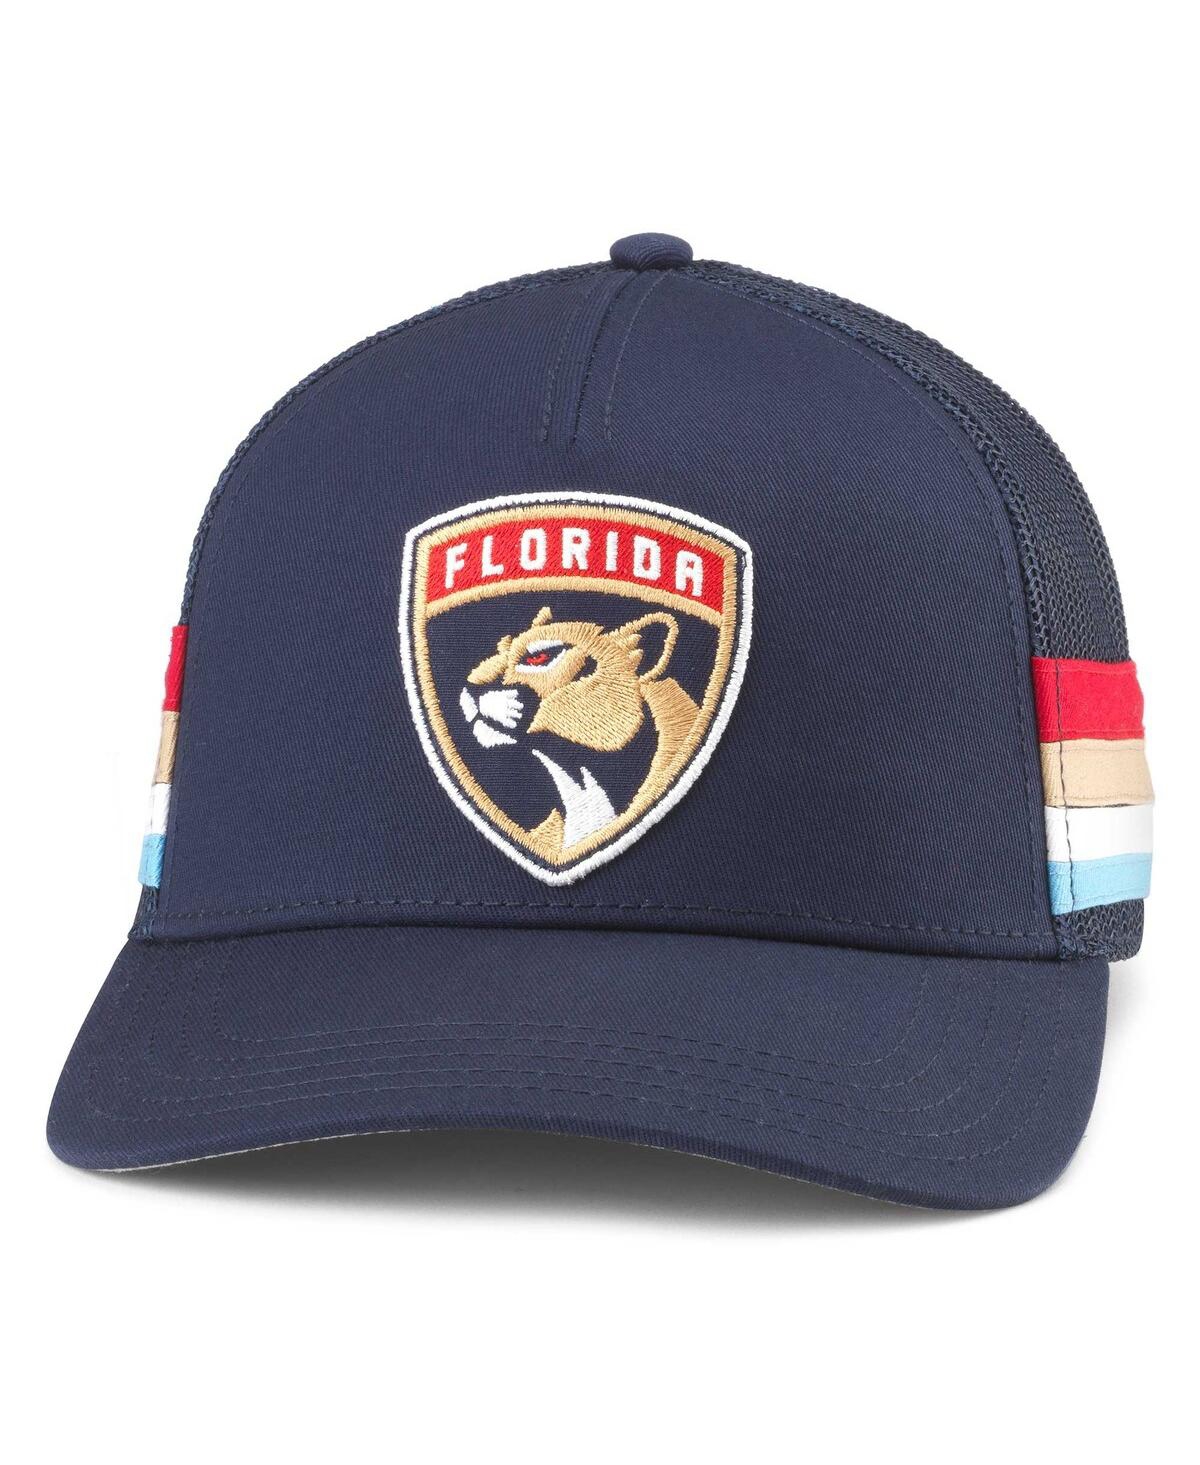 Men's American Needle Navy Florida Panthers HotFoot Stripes Trucker Adjustable Hat - Navy